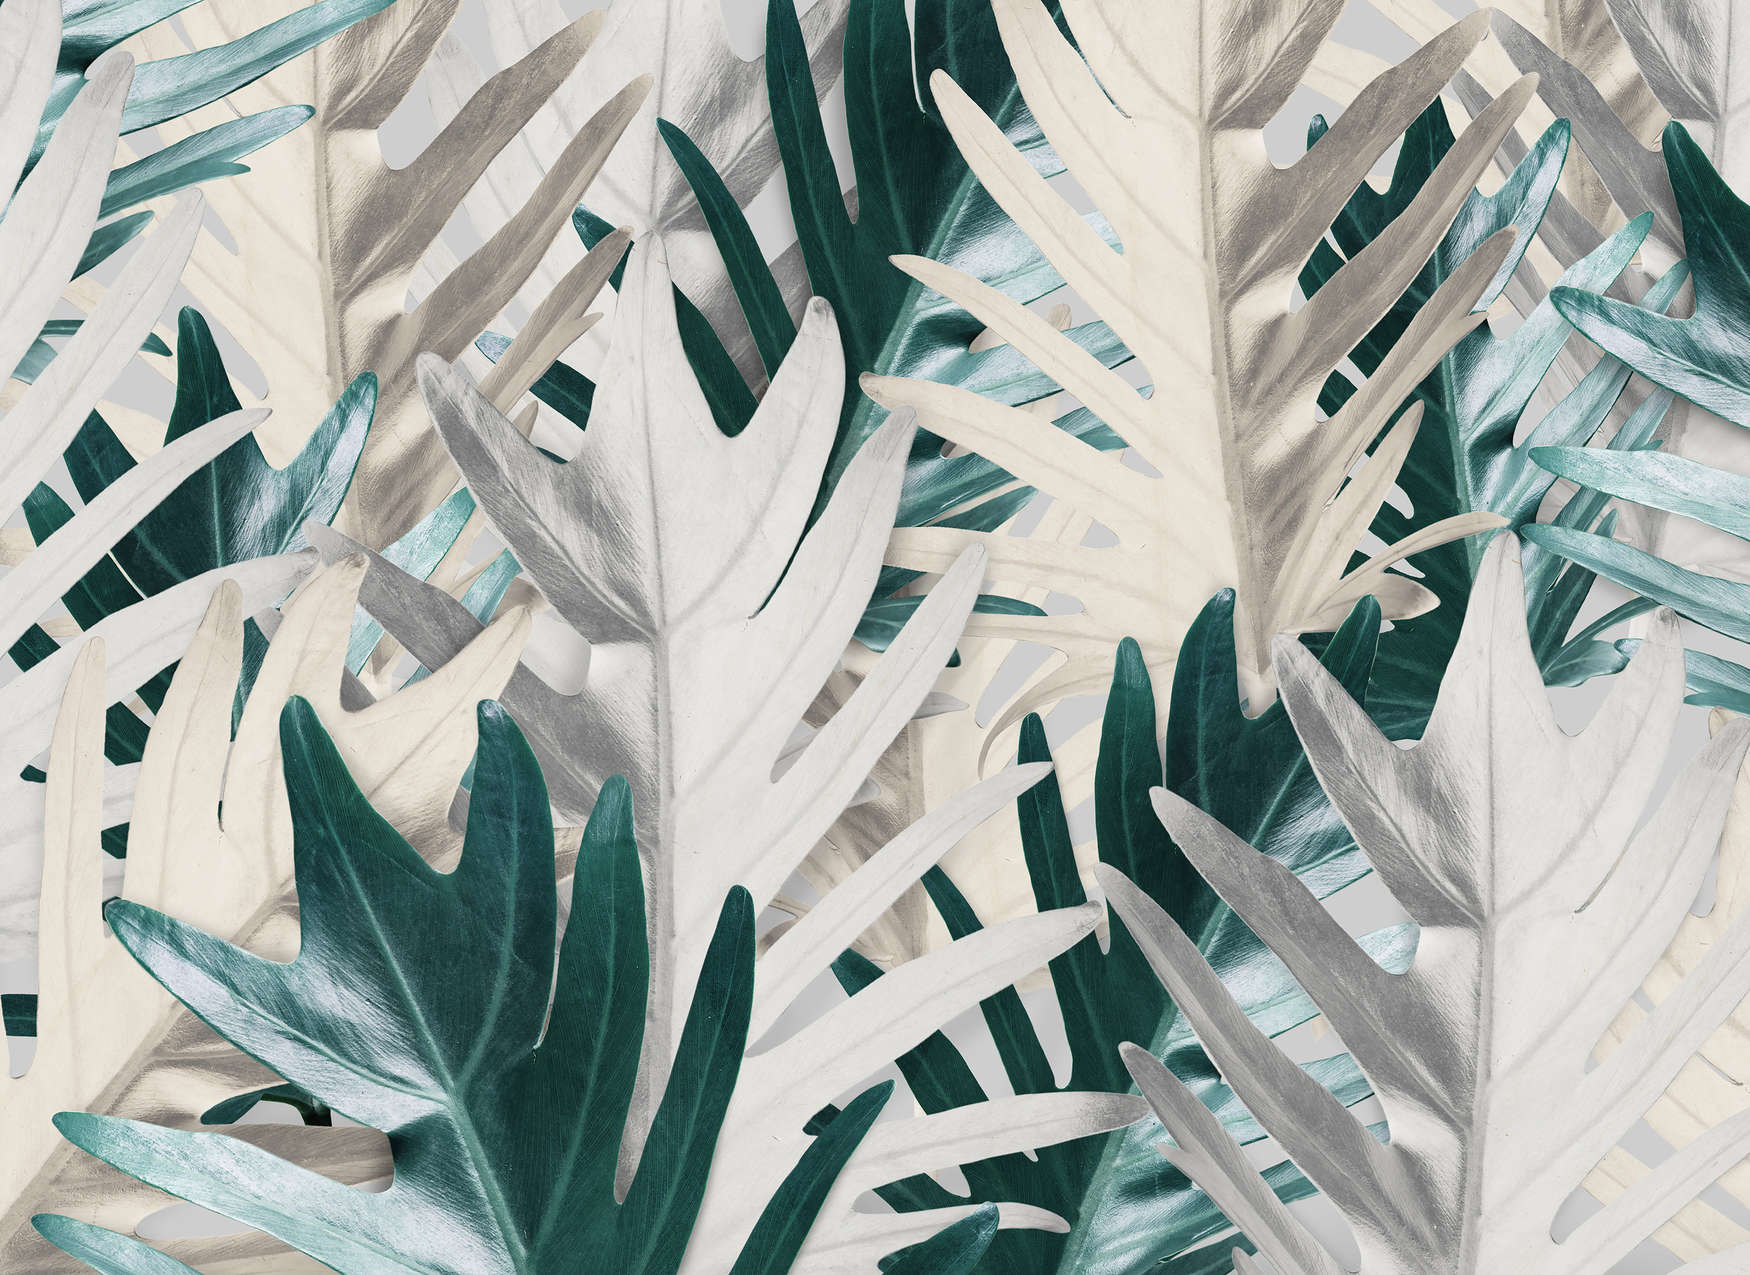             Tropical Palm Leaves Wallpaper - Green, White
        